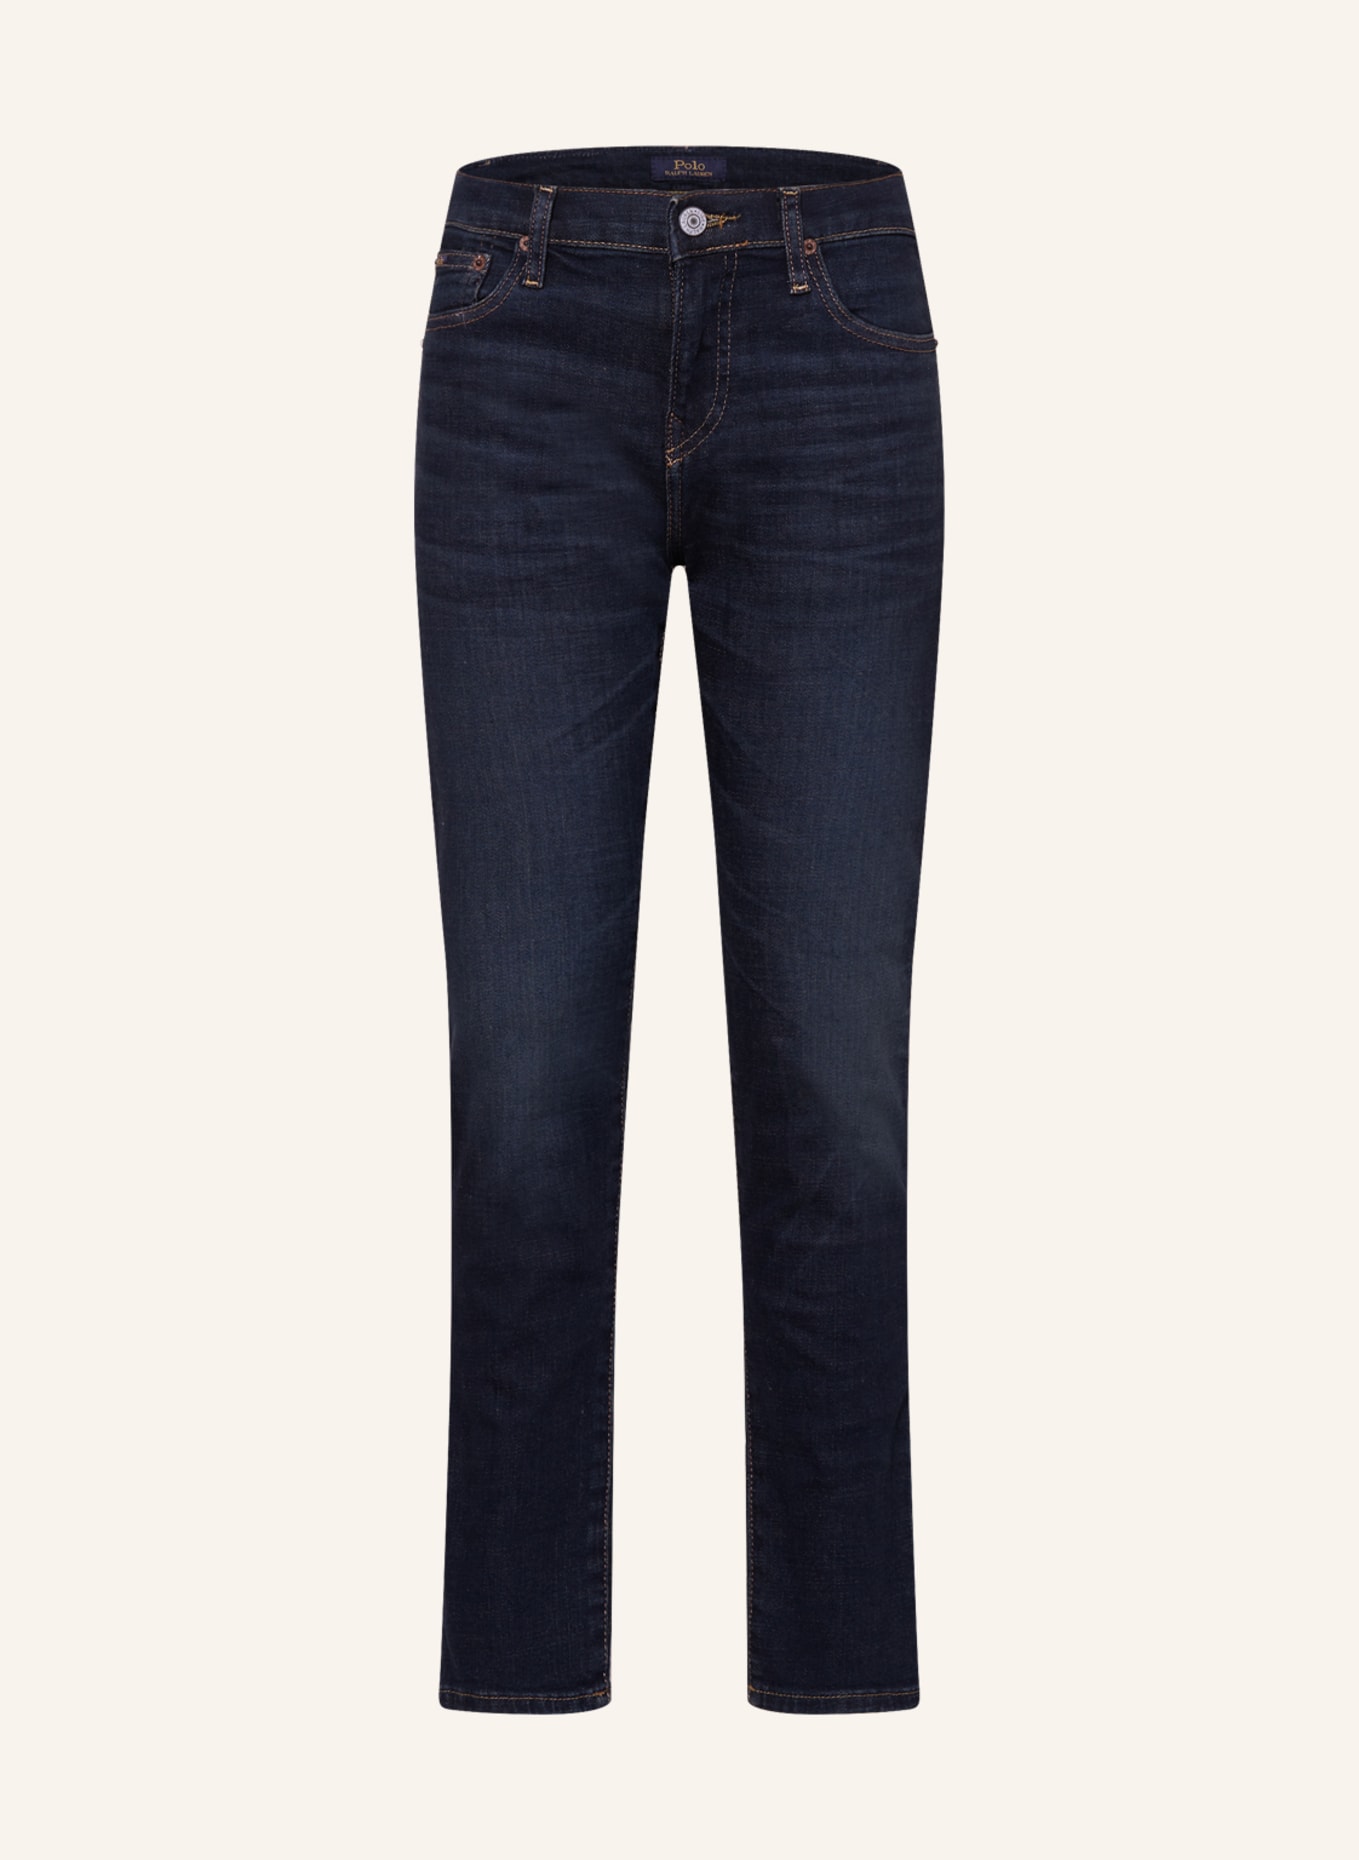 POLO RALPH LAUREN Jeans SULLIVAN Slim Fit, Farbe: 001 ADAMS WASH (Bild 1)